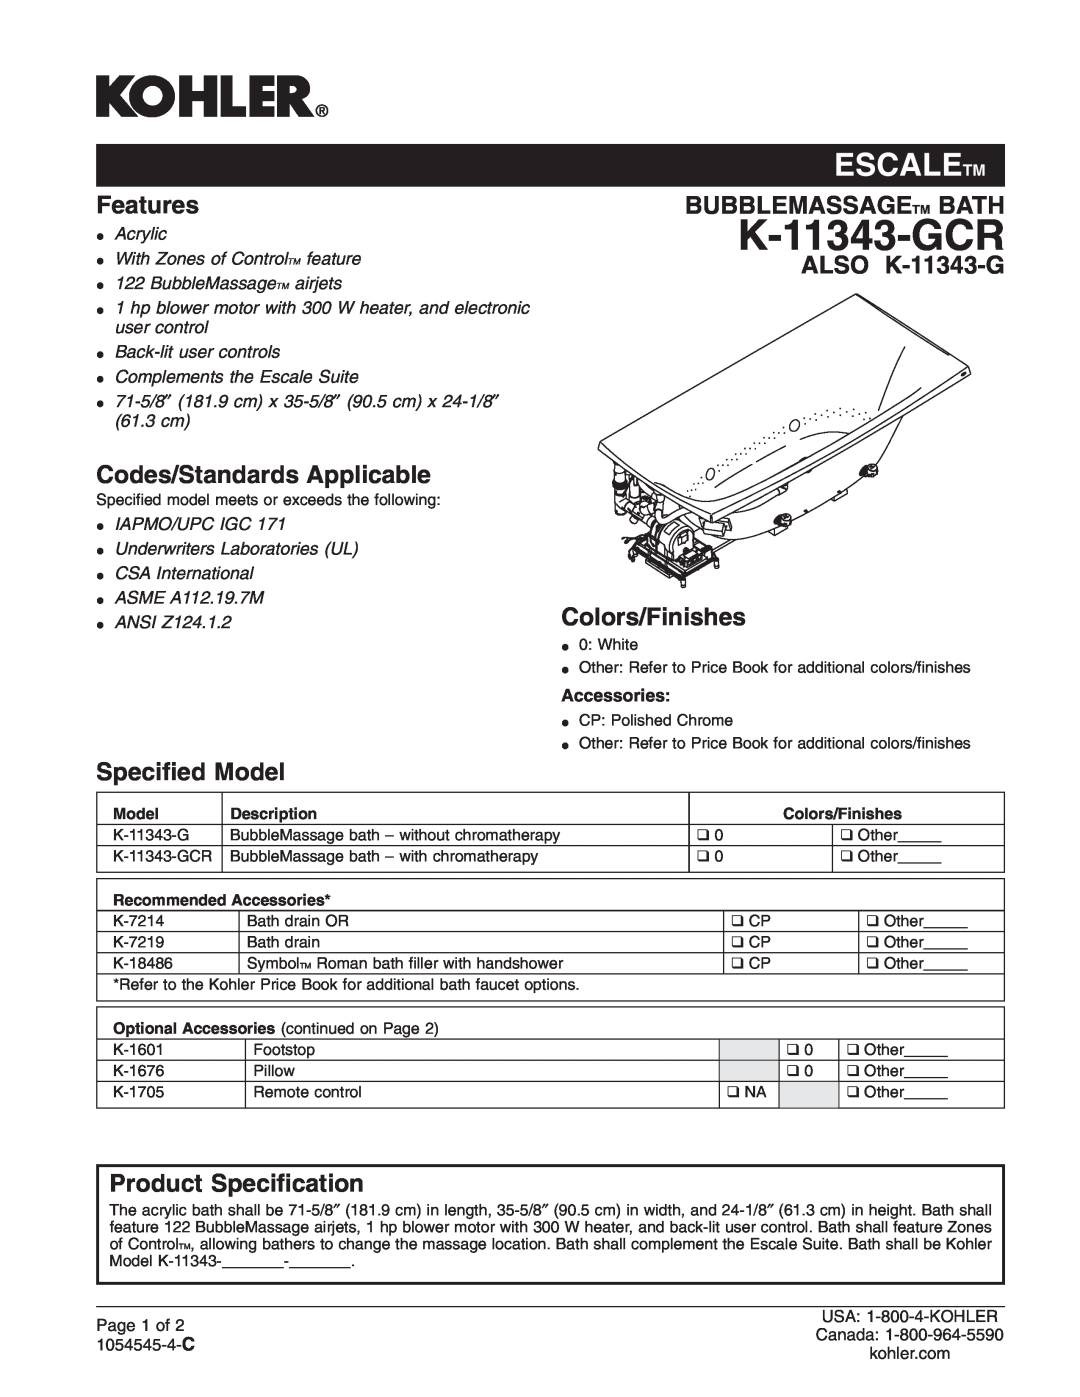 Kohler K-11343-G manual Escaletm, Features, Codes/Standards Applicable, Speciﬁed Model, Bubblemassagetm Bath, Page 1 of 